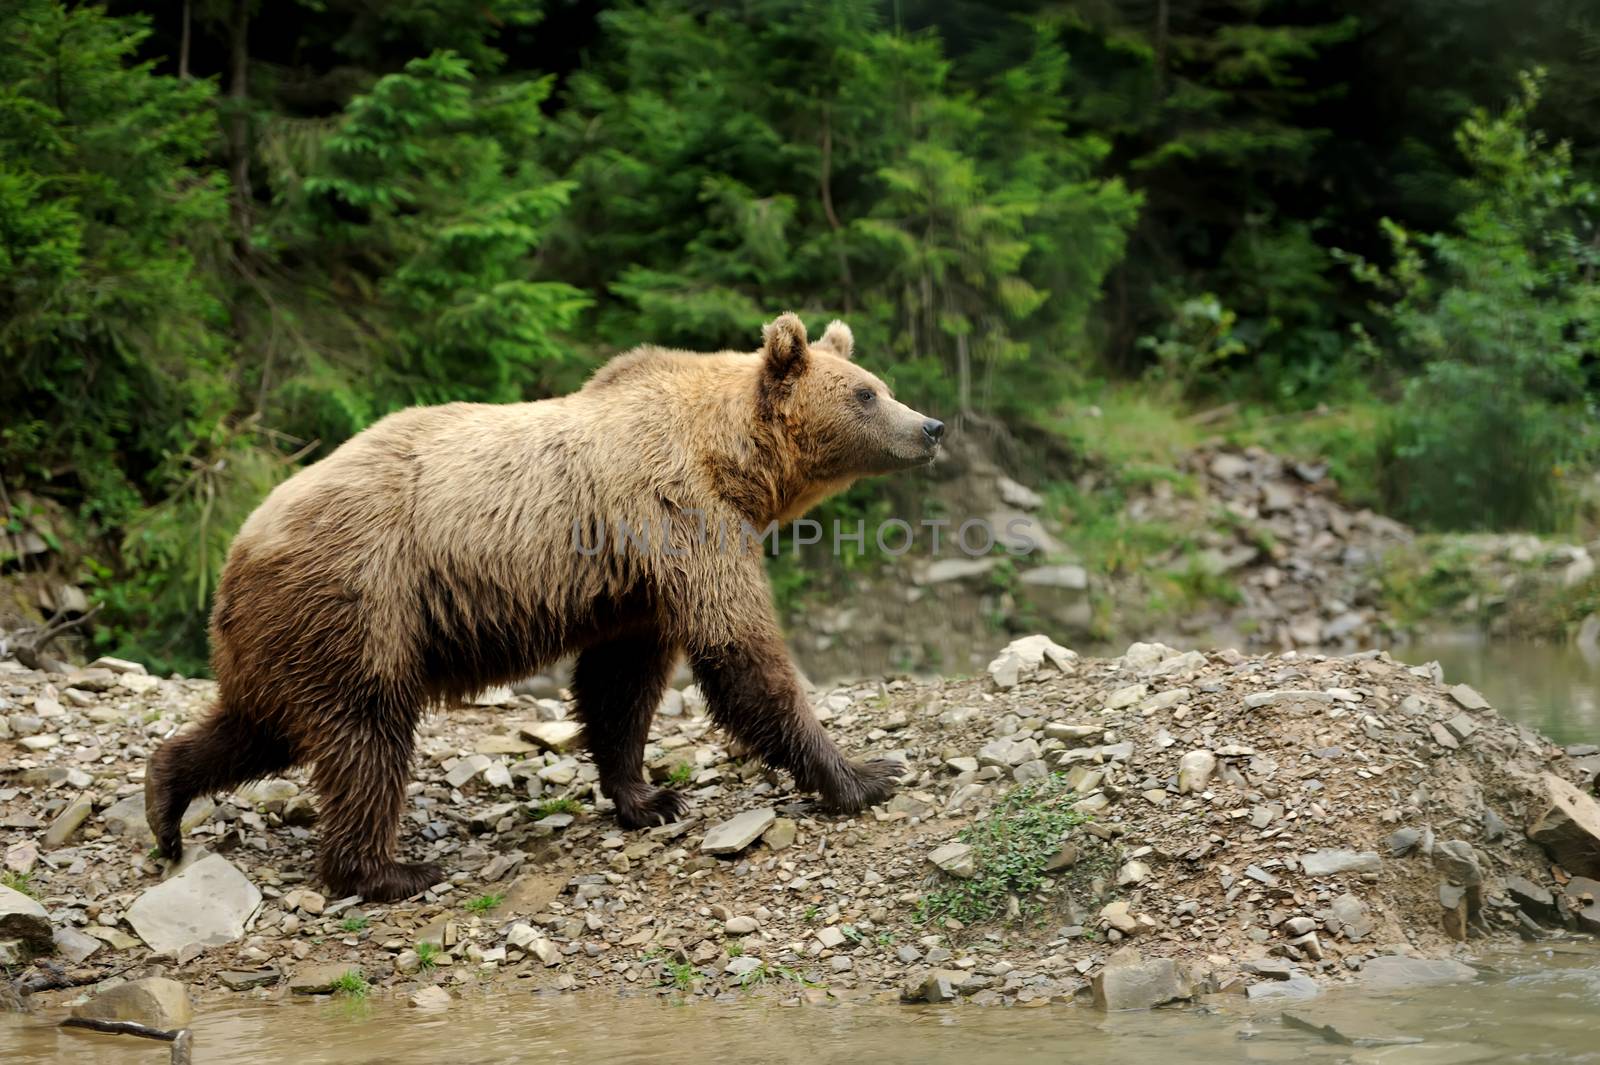 Big brown bear (Ursus arctos) in the environment